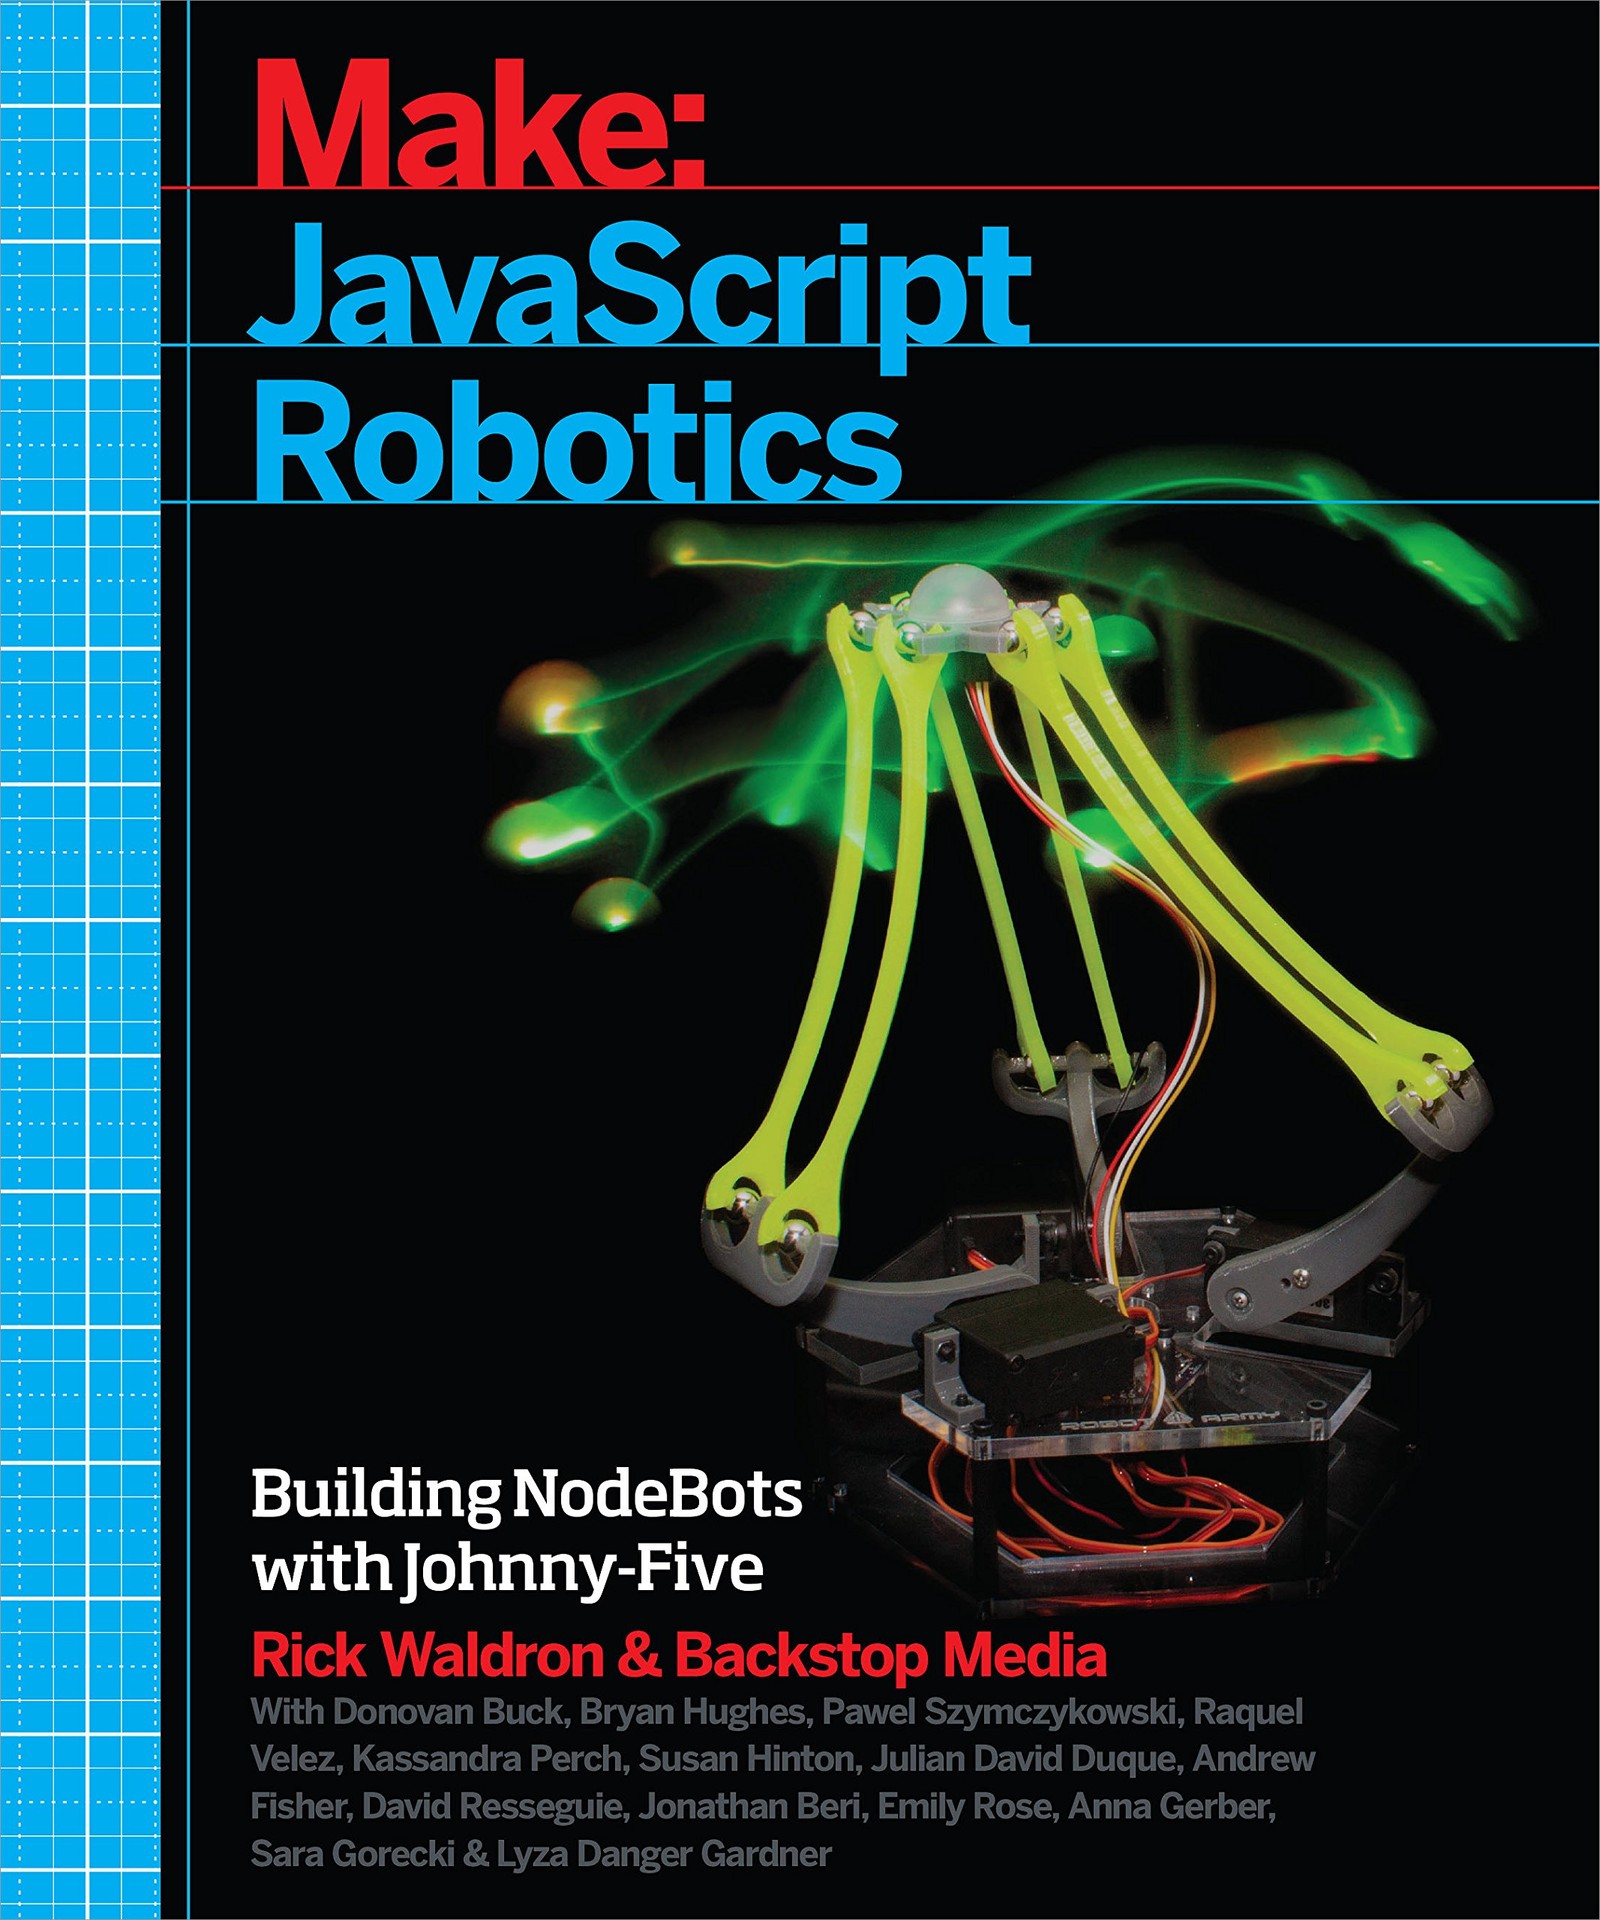 Make JavaScript Robotics Book Cover